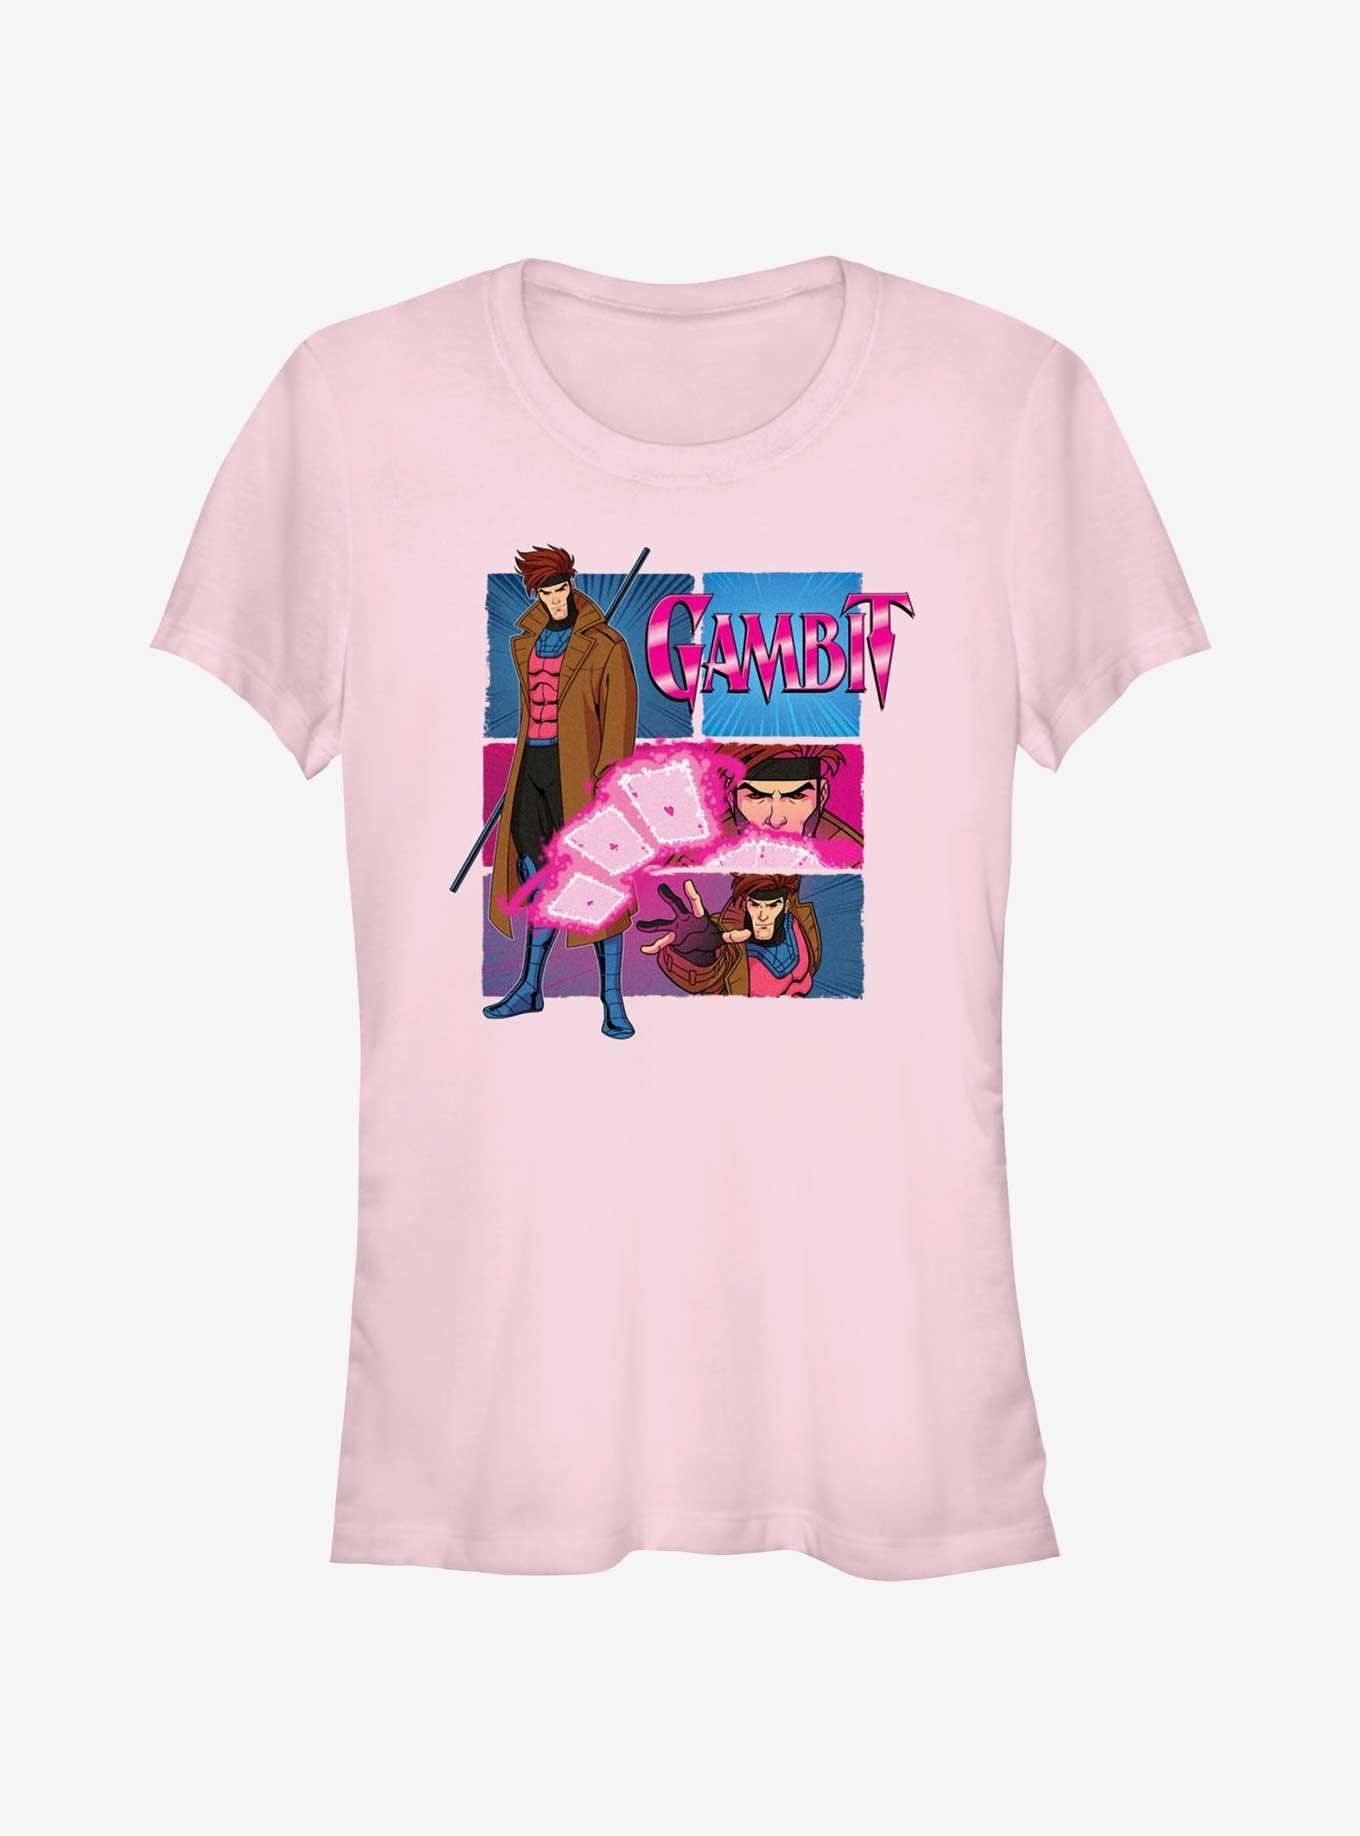 X-Men '97 Gambit Cards Girls T-Shirt, LIGHT PINK, hi-res